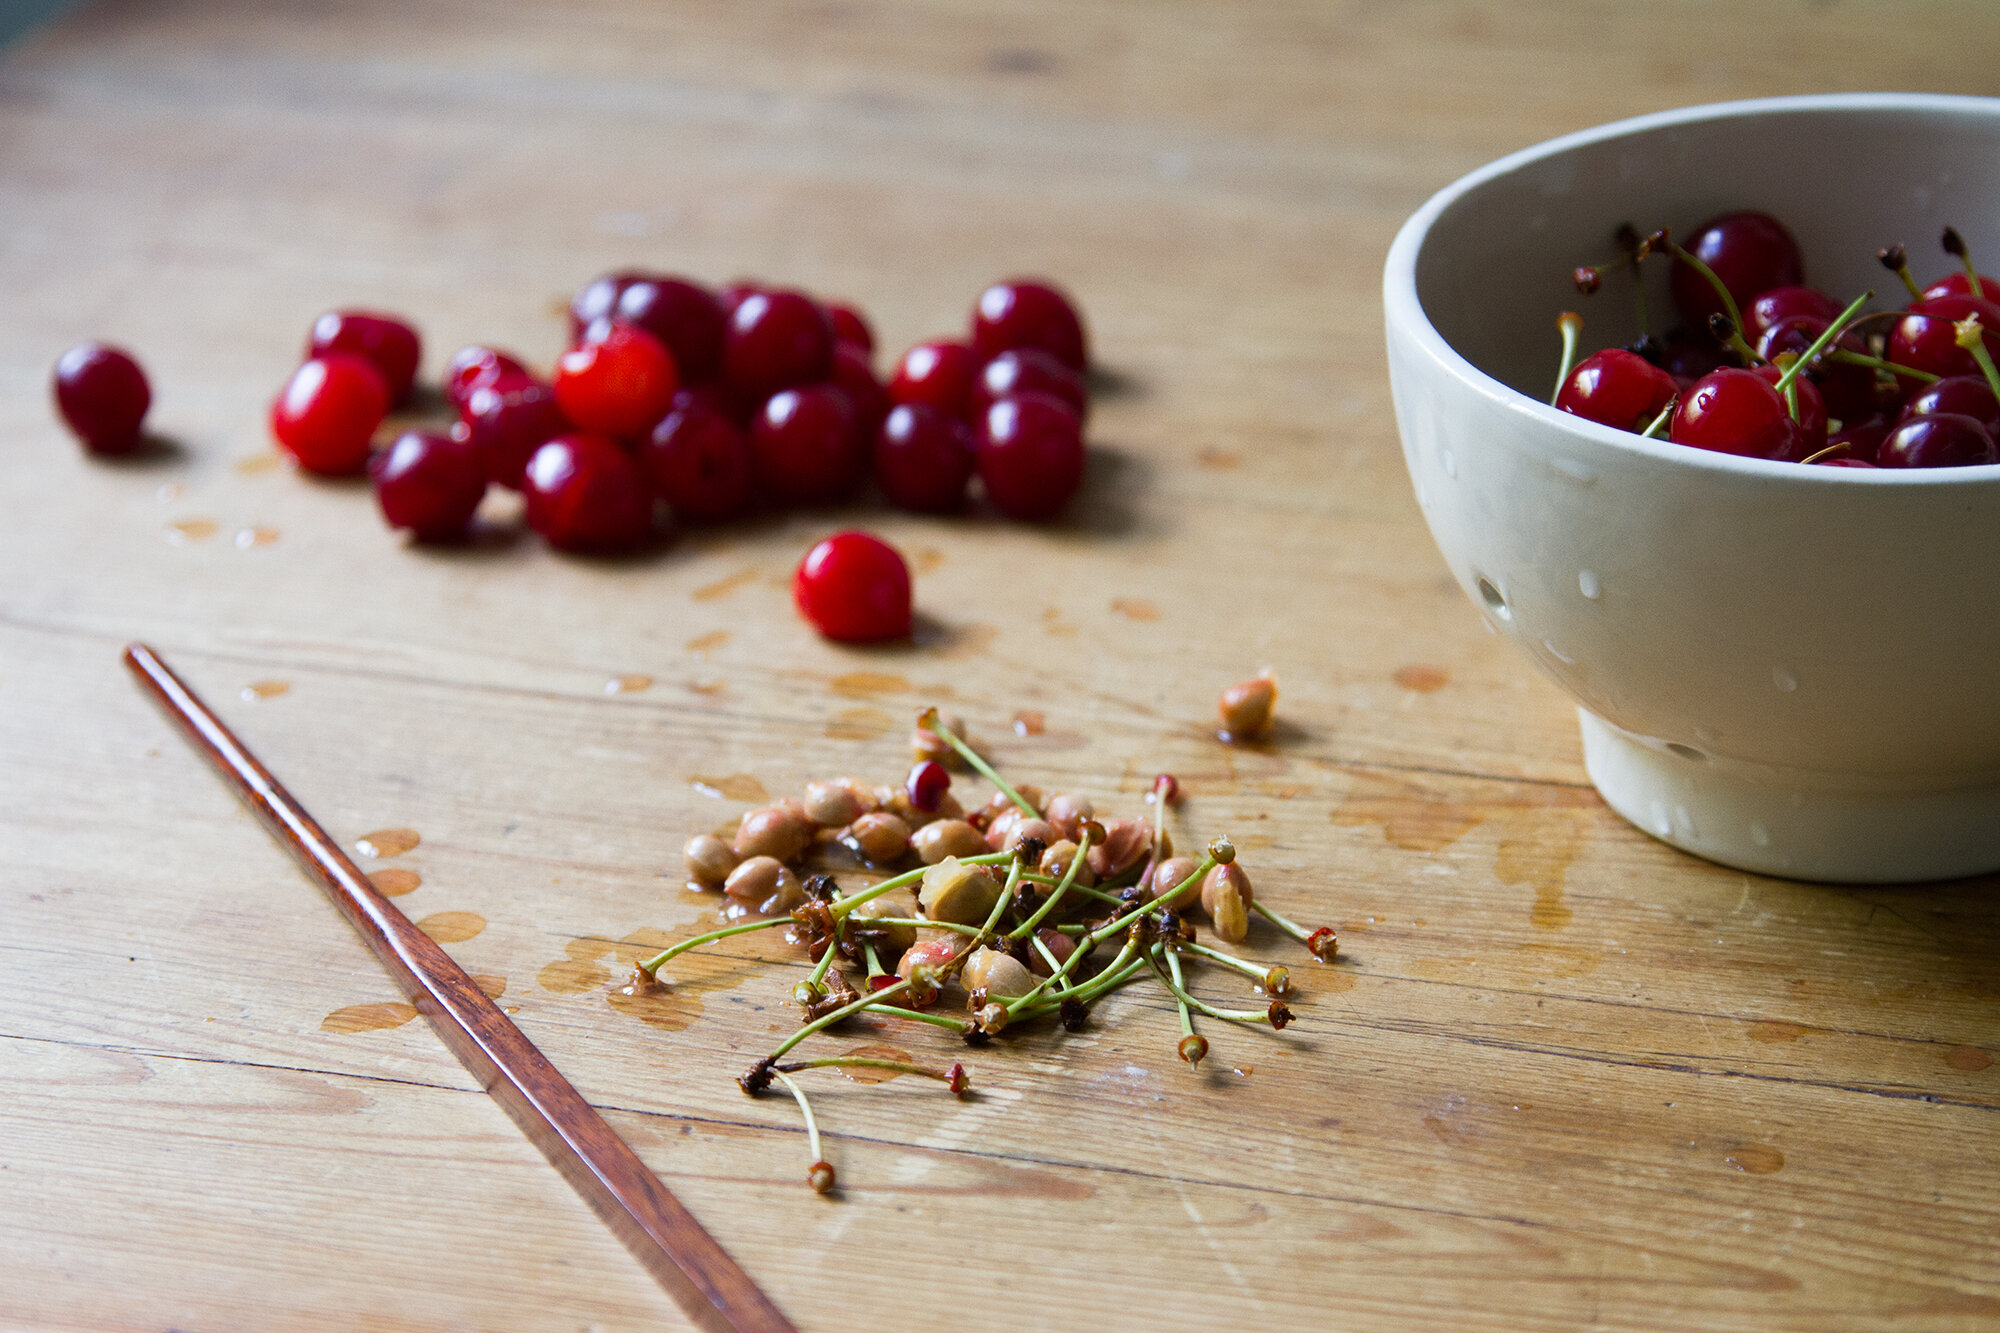 make your own maraschino cherries | reading my tea leaves